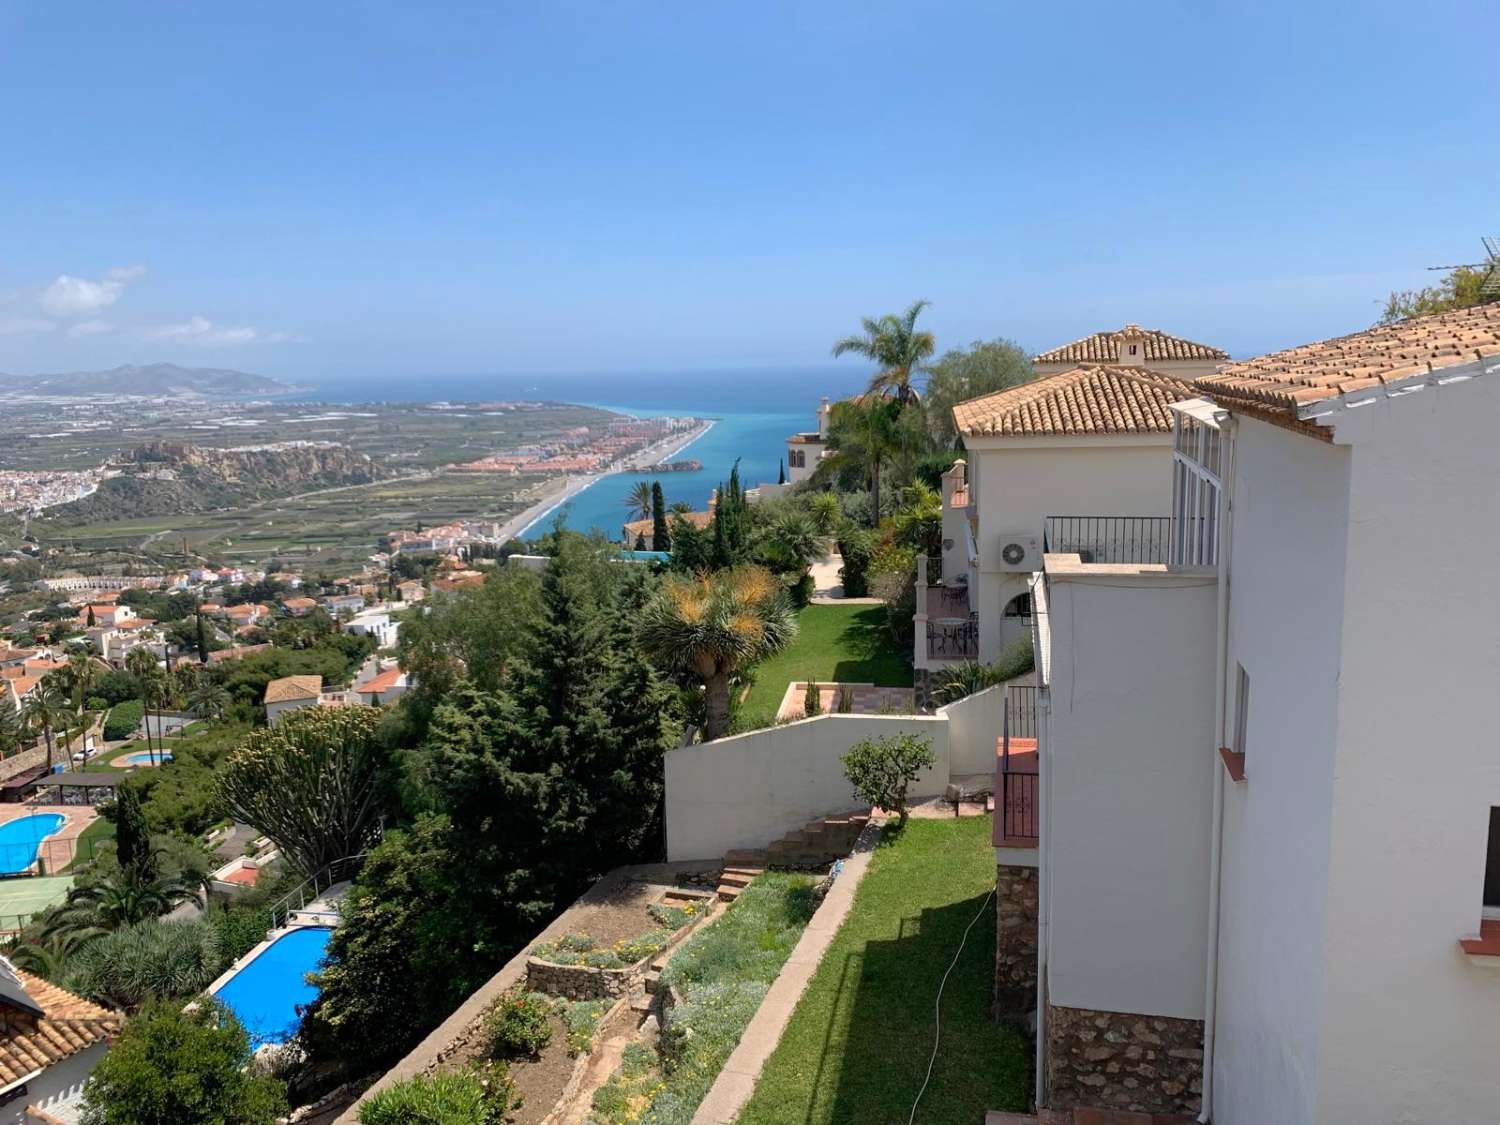 Villa for sale with breathtaking views in Salobrena